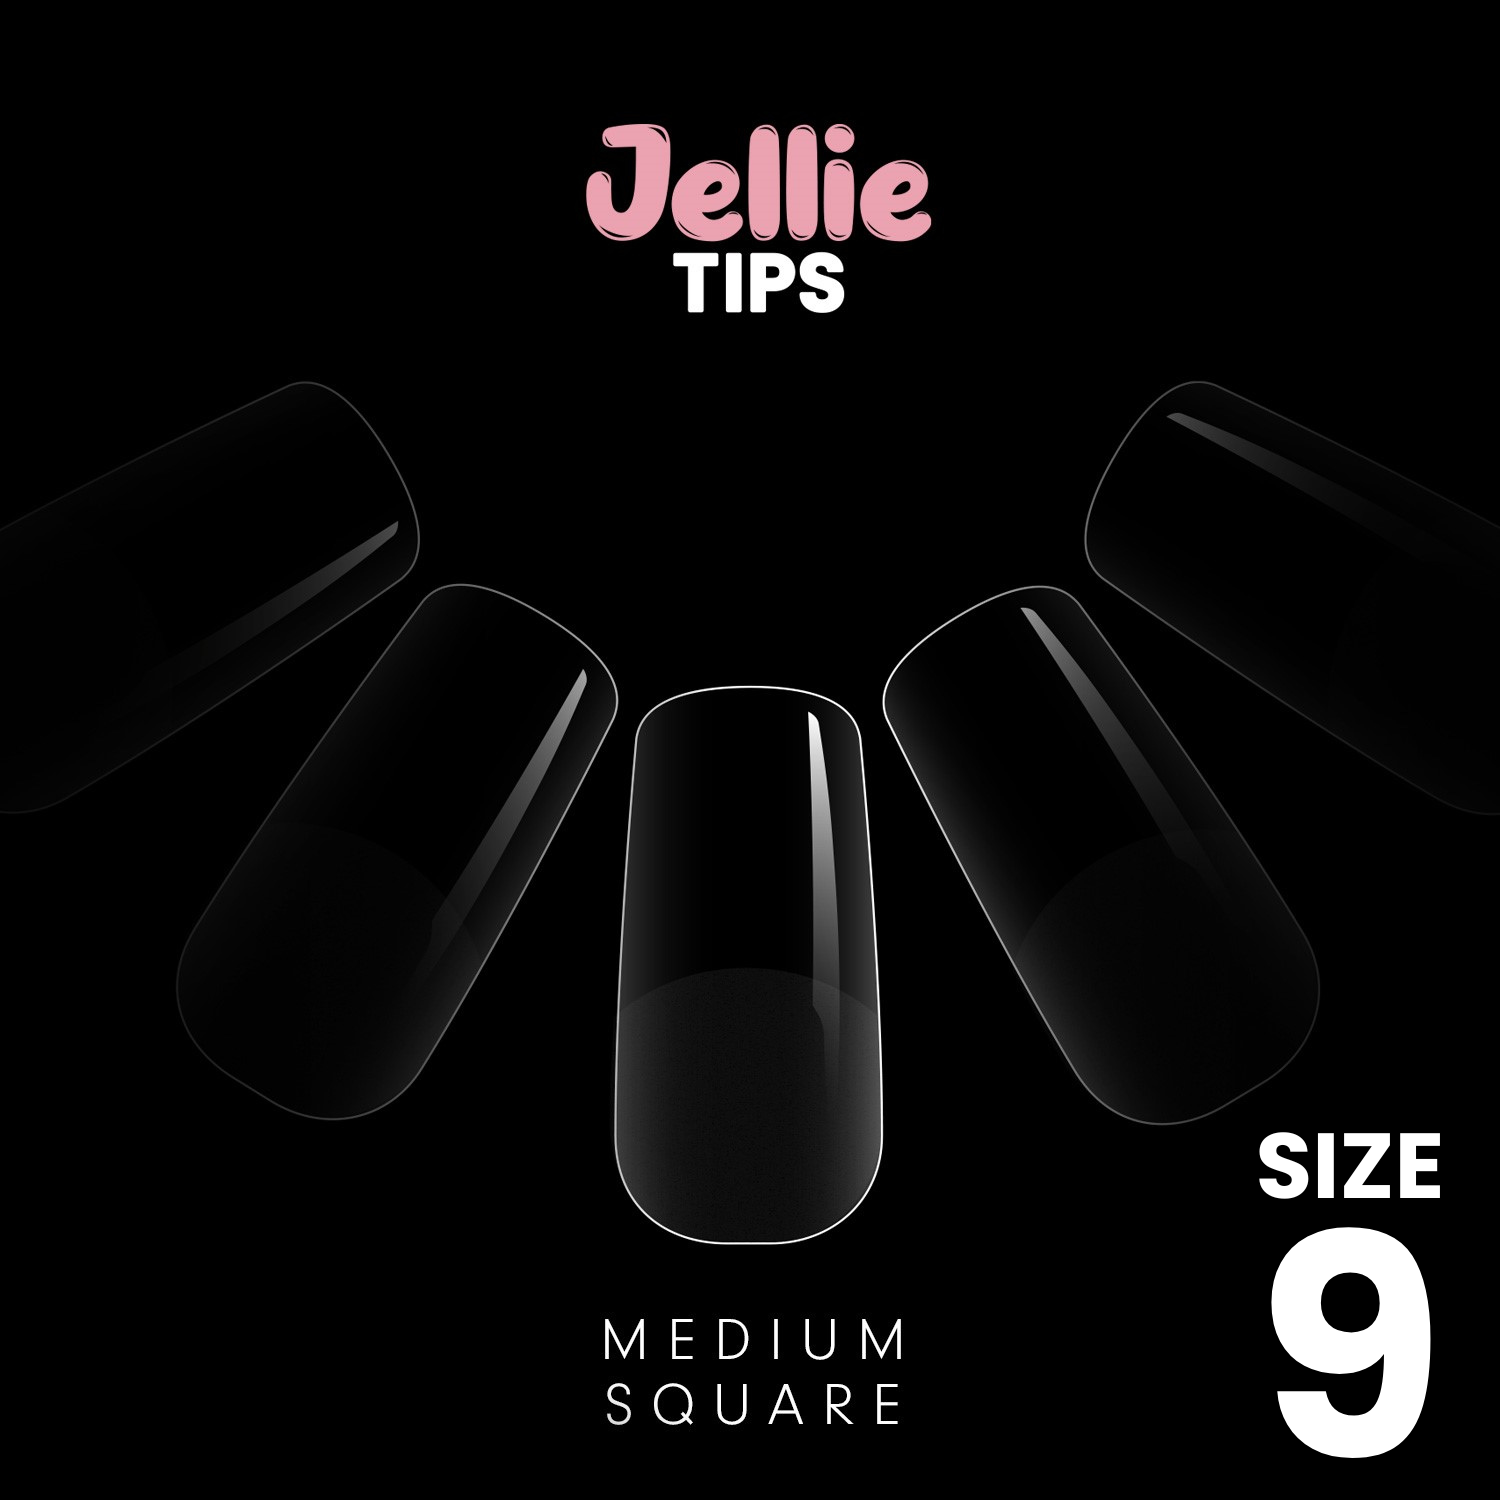 Halo Jellie Nail Tips Medium Square, Sizes 9, 50 One Size